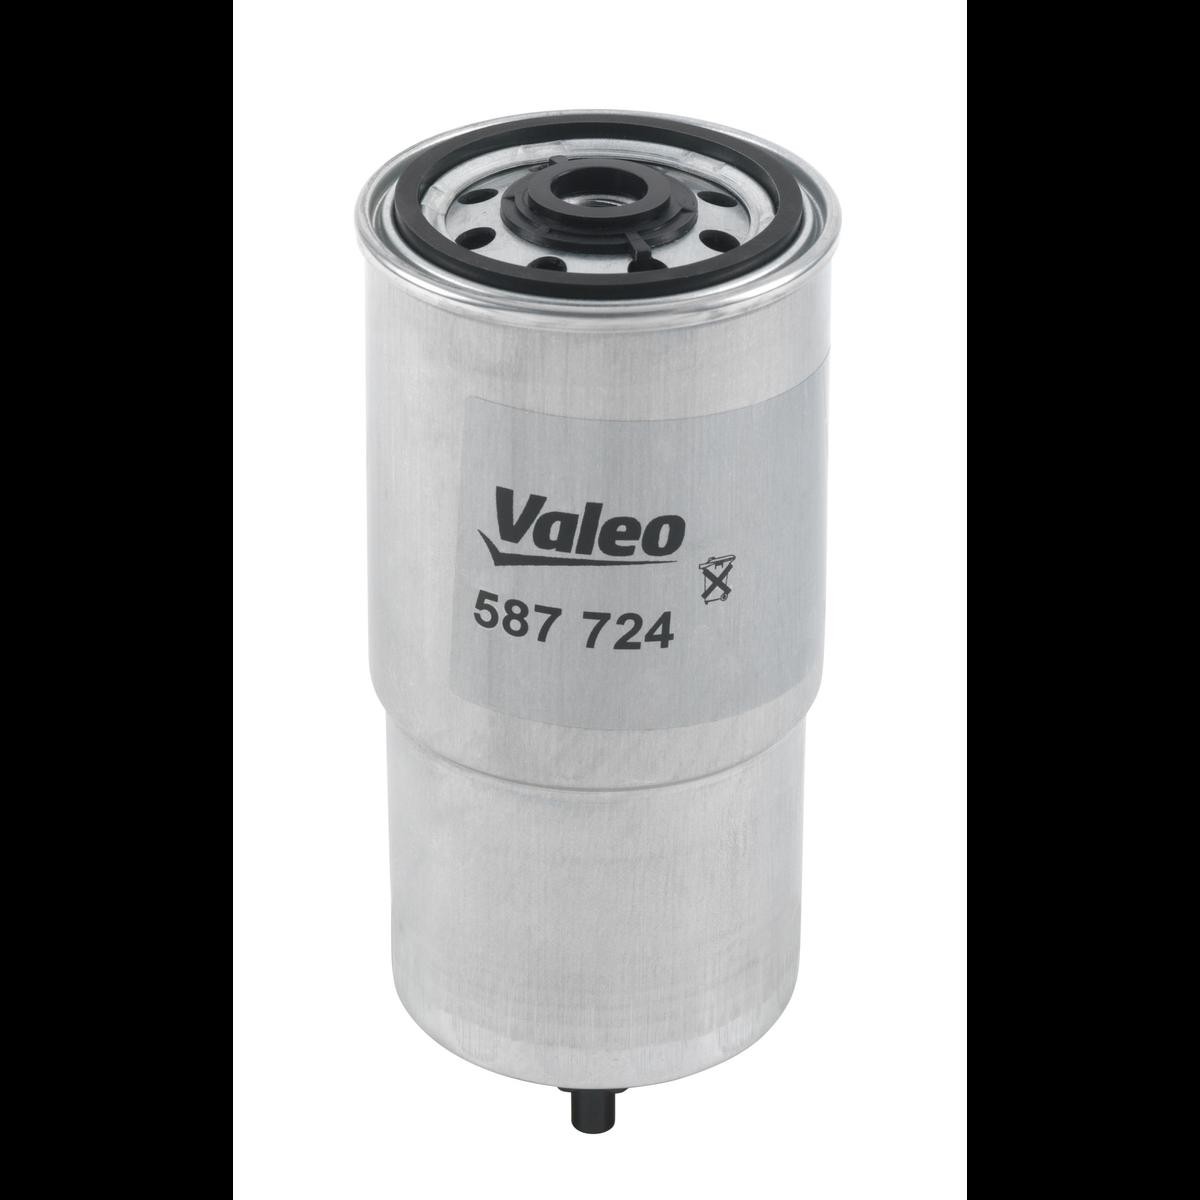 VALEO 587724 Fuel filter 16403-09W00